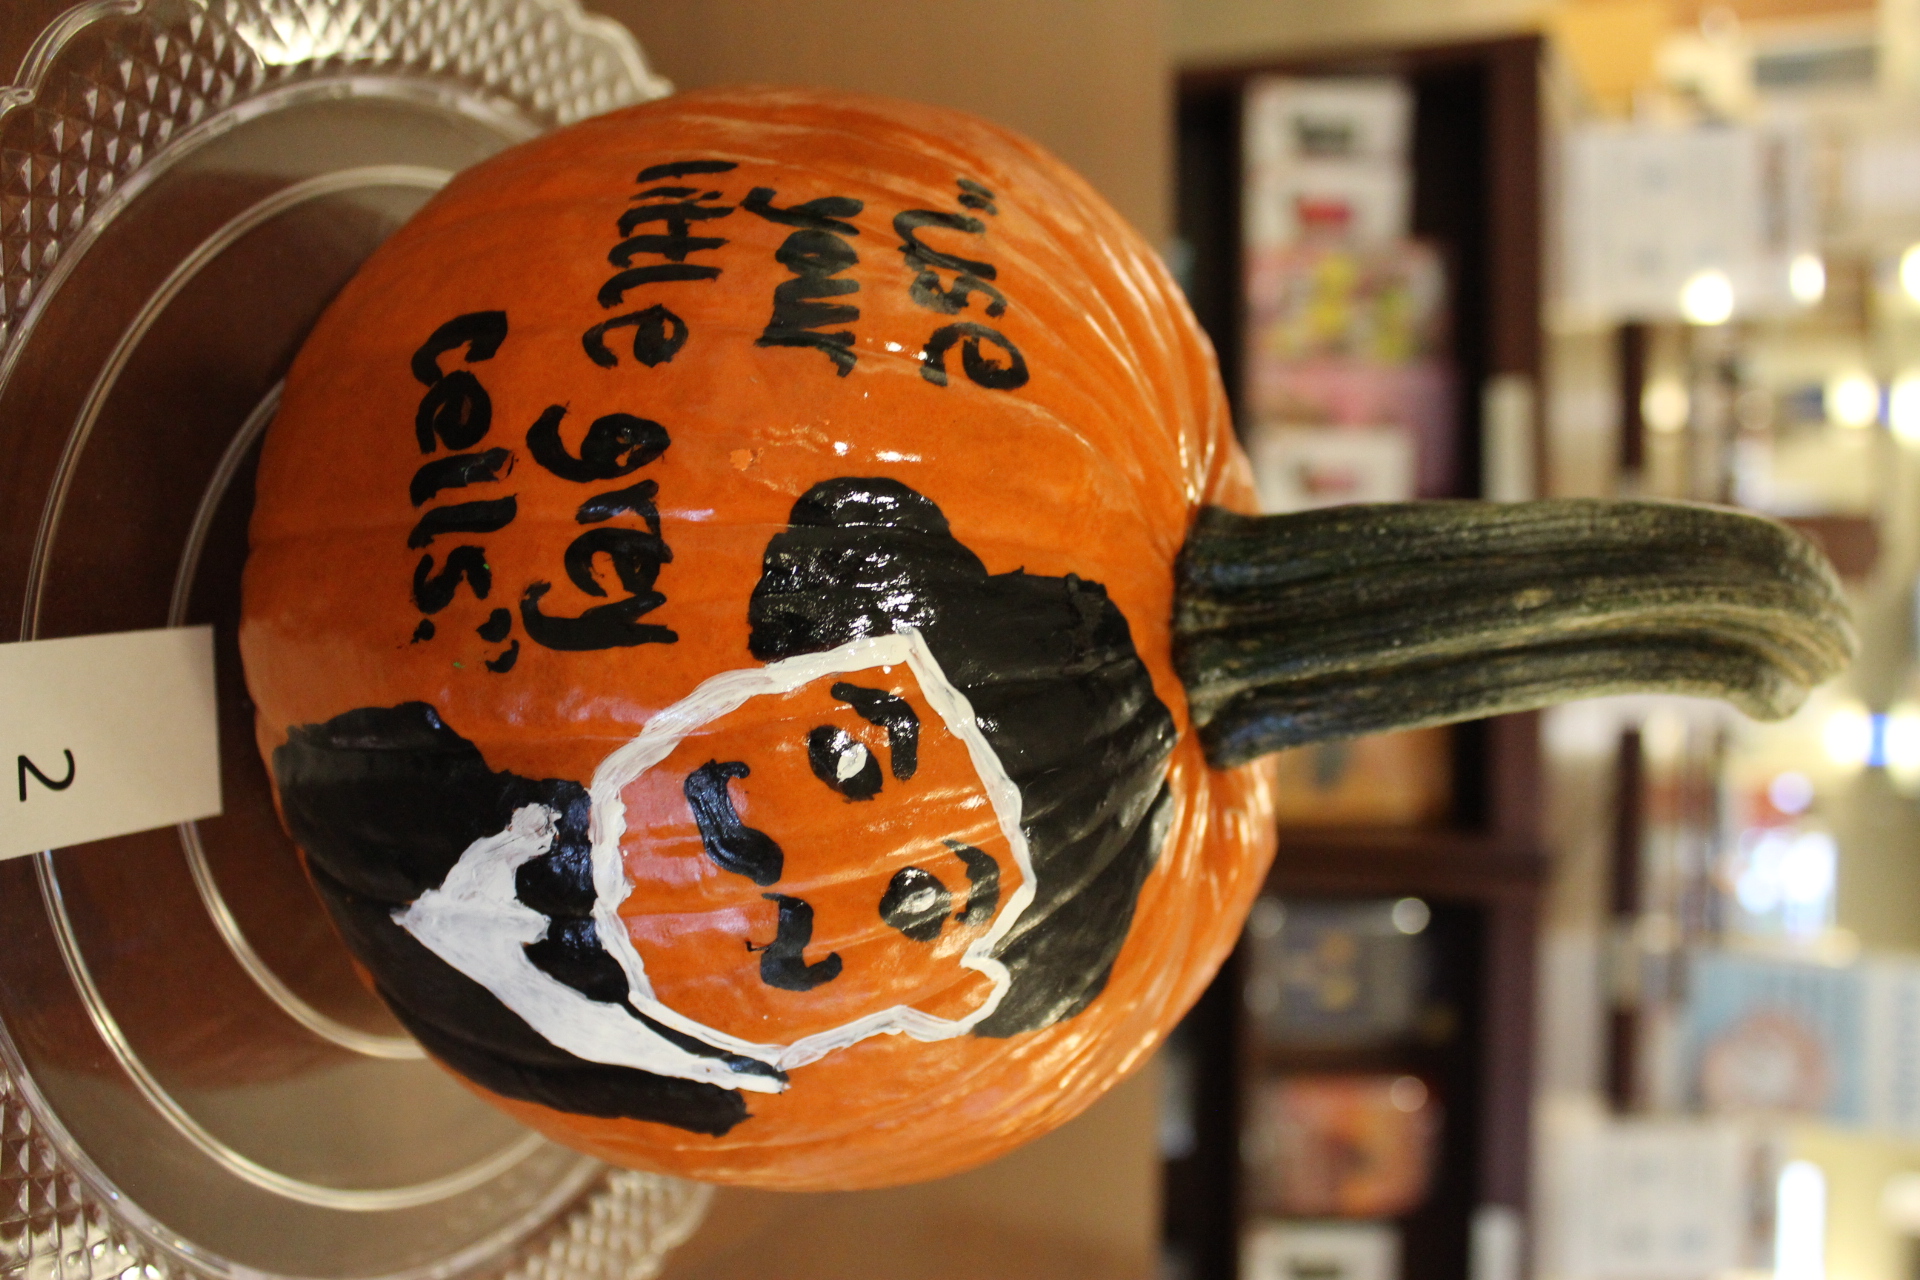 Pumpkin decorated as "Hercule Poirot"